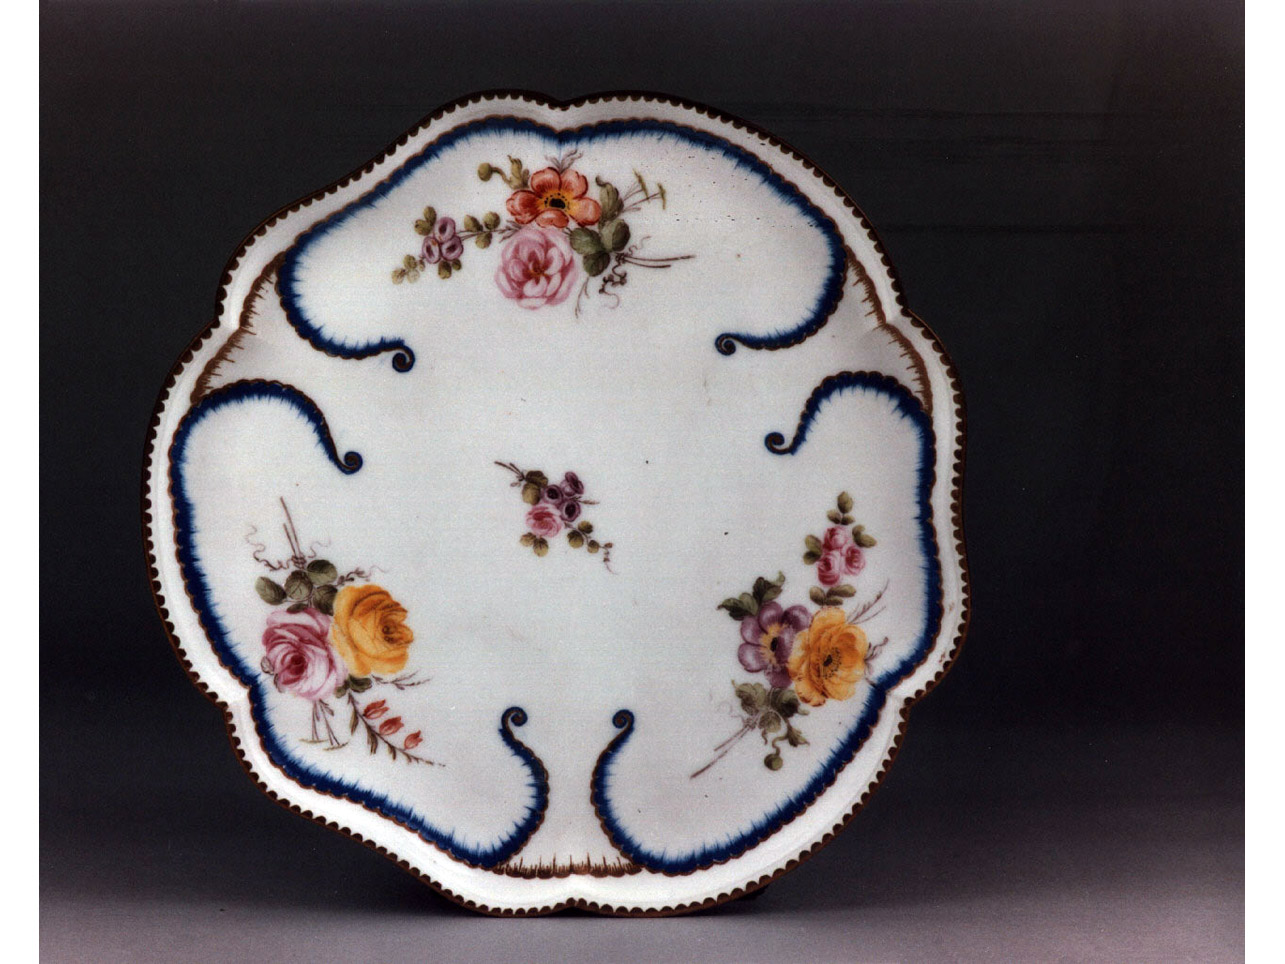 motivi decorativi floreali (vassoio) - manifattura di Sèvres (sec. XVIII)